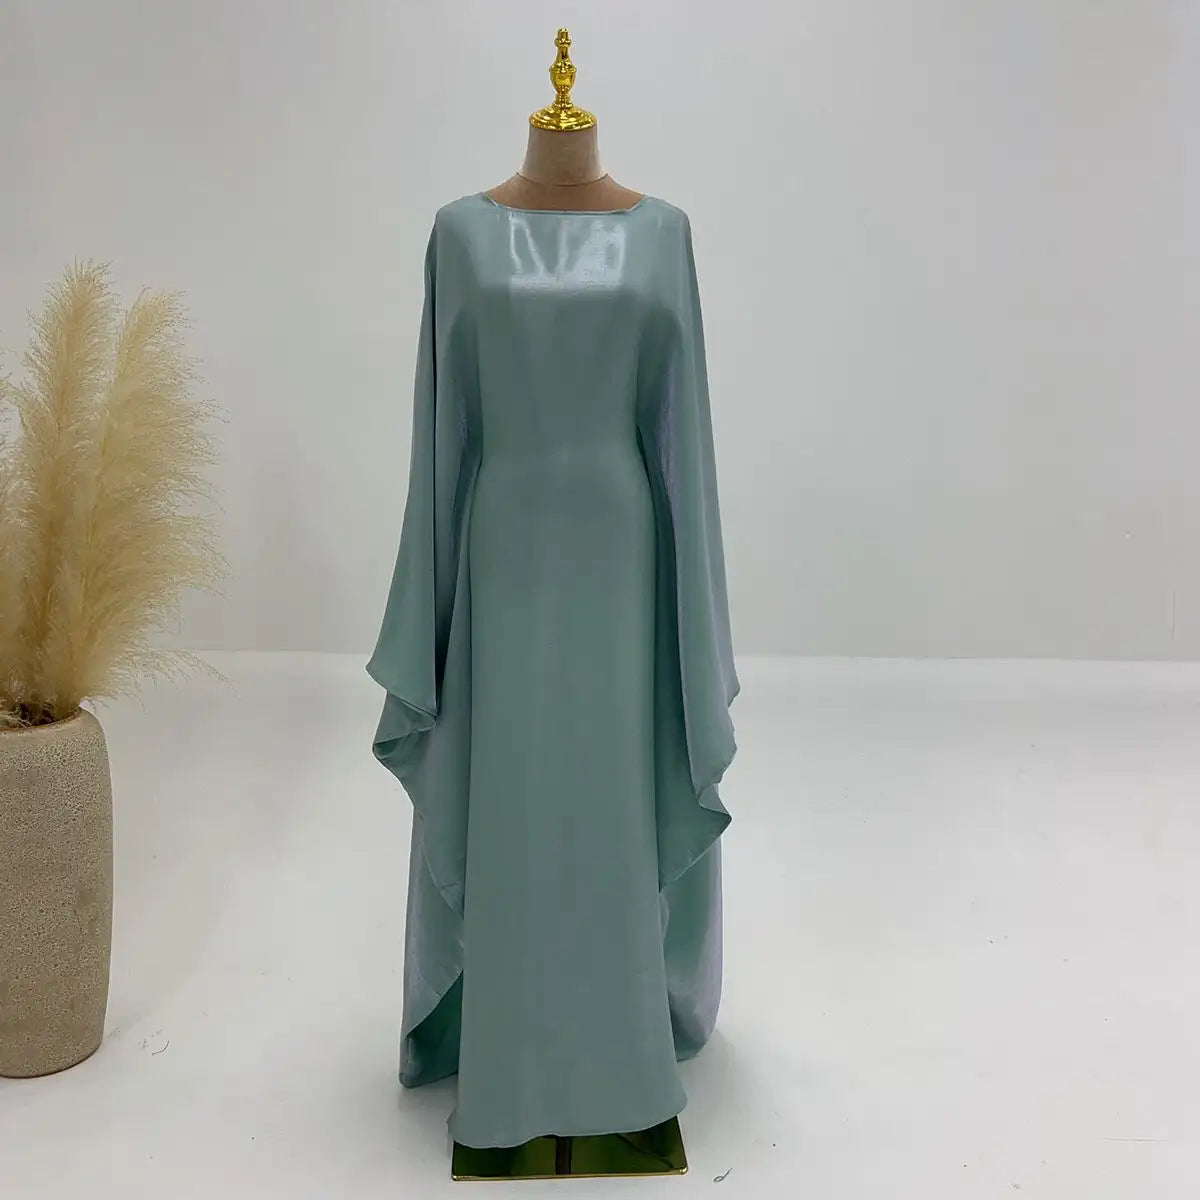 20 Color Options Sparkling Muslim Women Abaya Dress